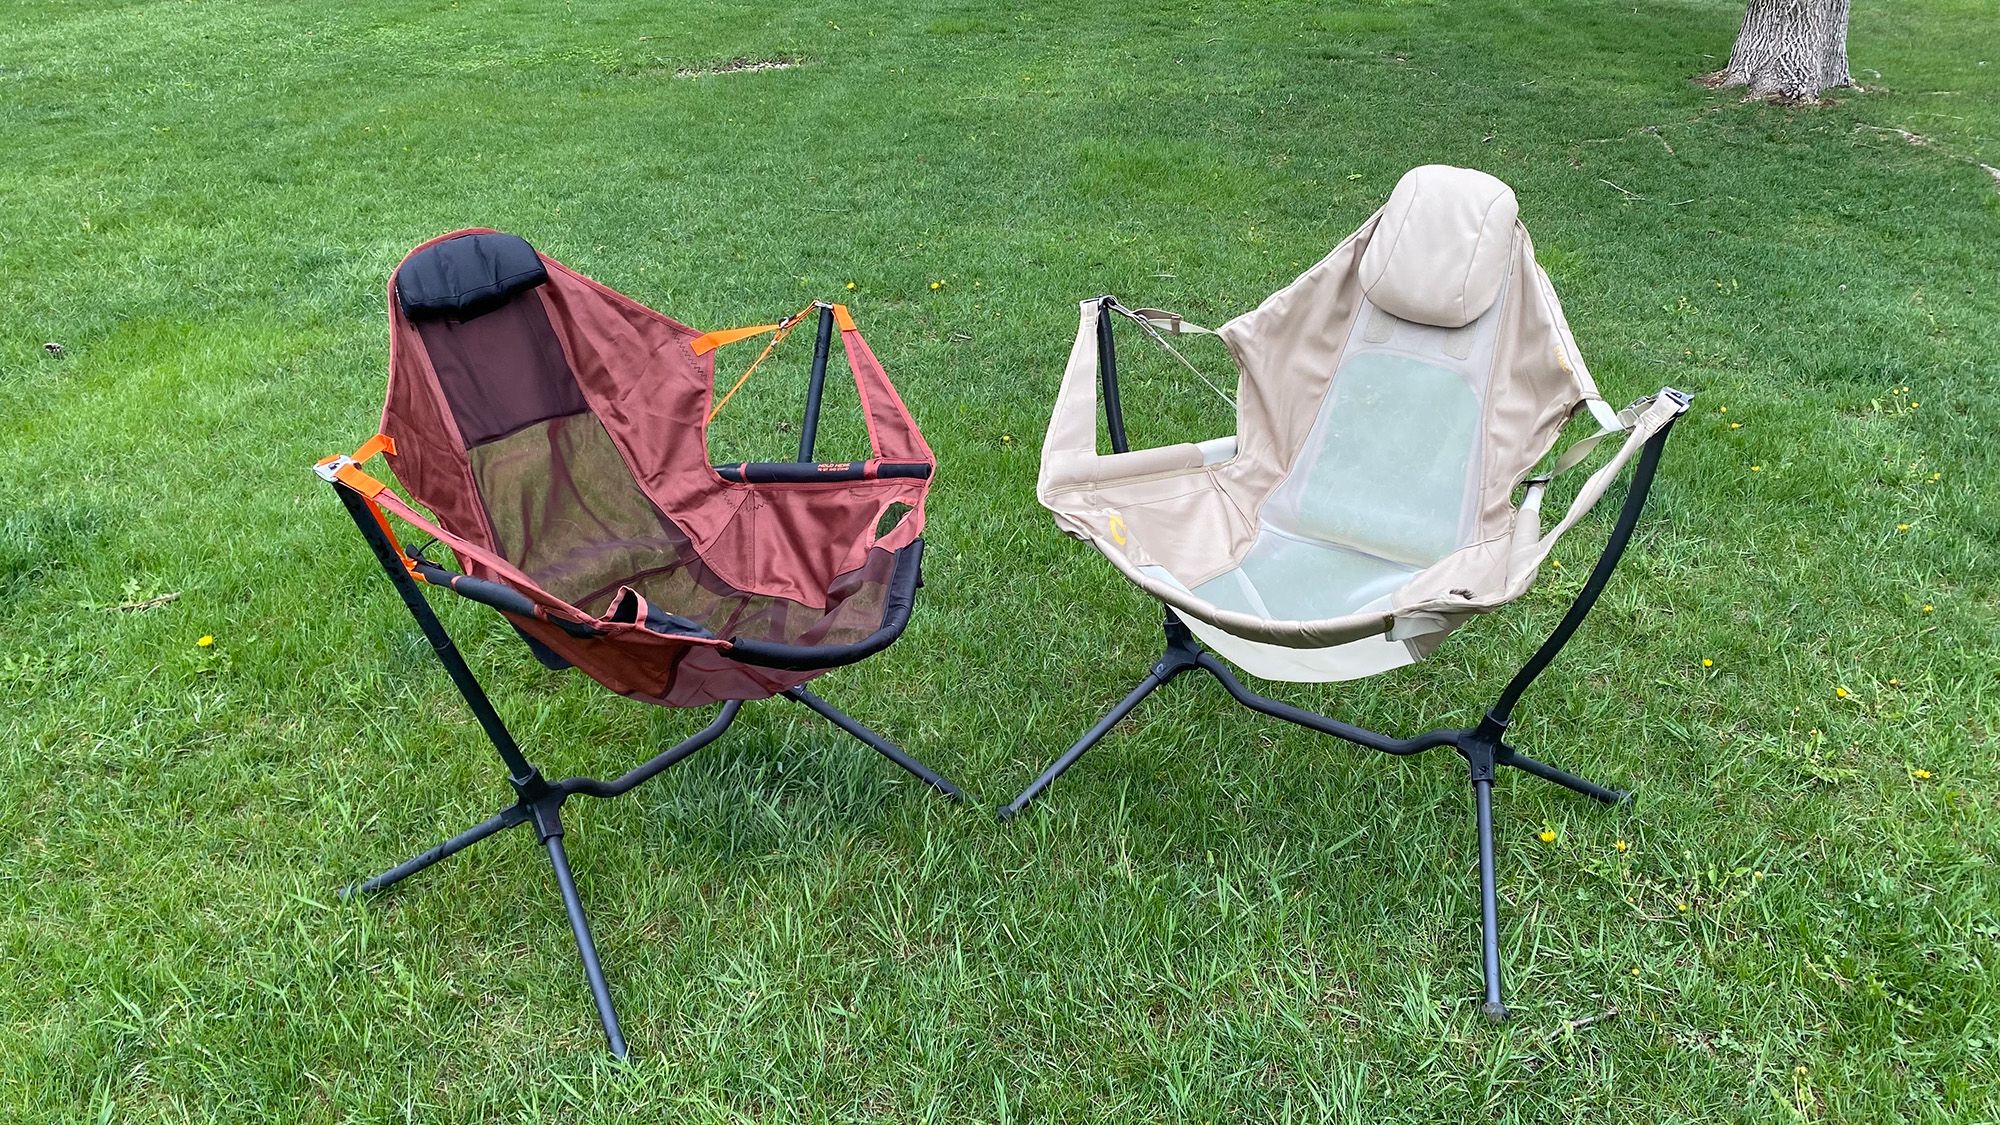 https://media.cnn.com/api/v1/images/stellar/prod/nemo-stargaze-reclining-camp-chair-lead-cnnu.jpg?c=16x9